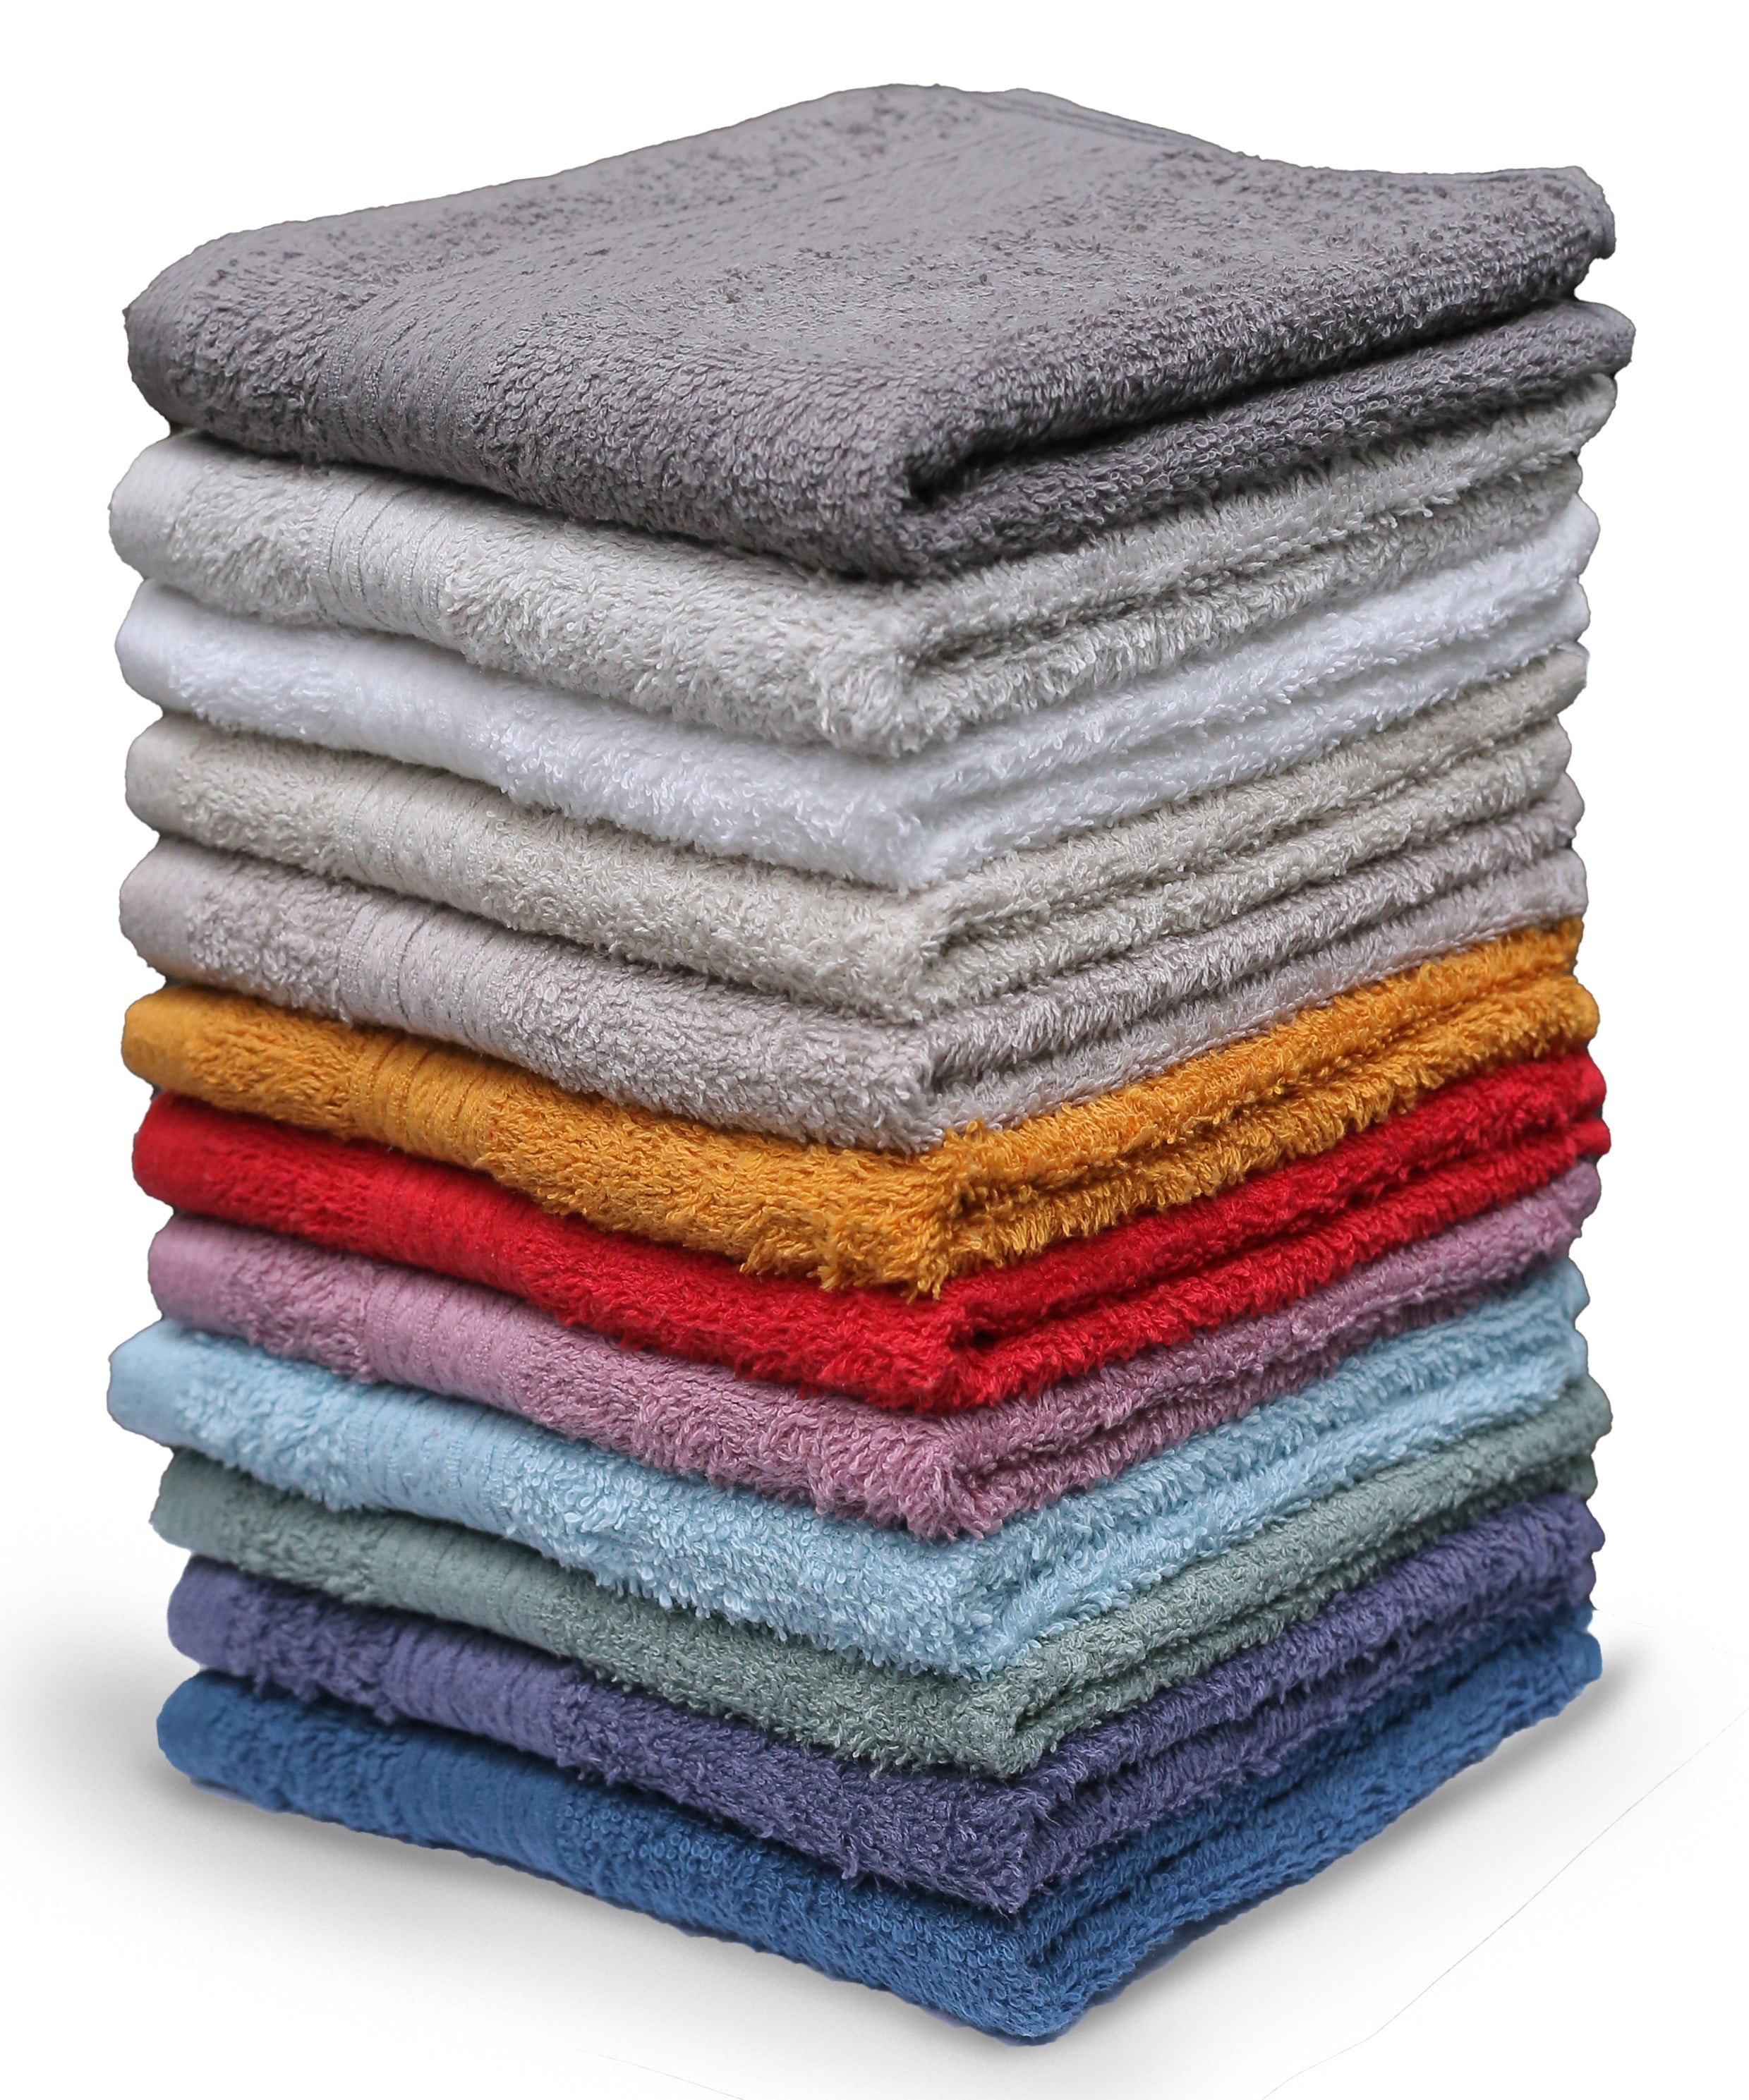 12 Pack Wash Cloths Beach Style 3 Colors, Cotton Washcloths Gentle for Men  Women Kids, Durable Wash Rags Large Size 13 X 13